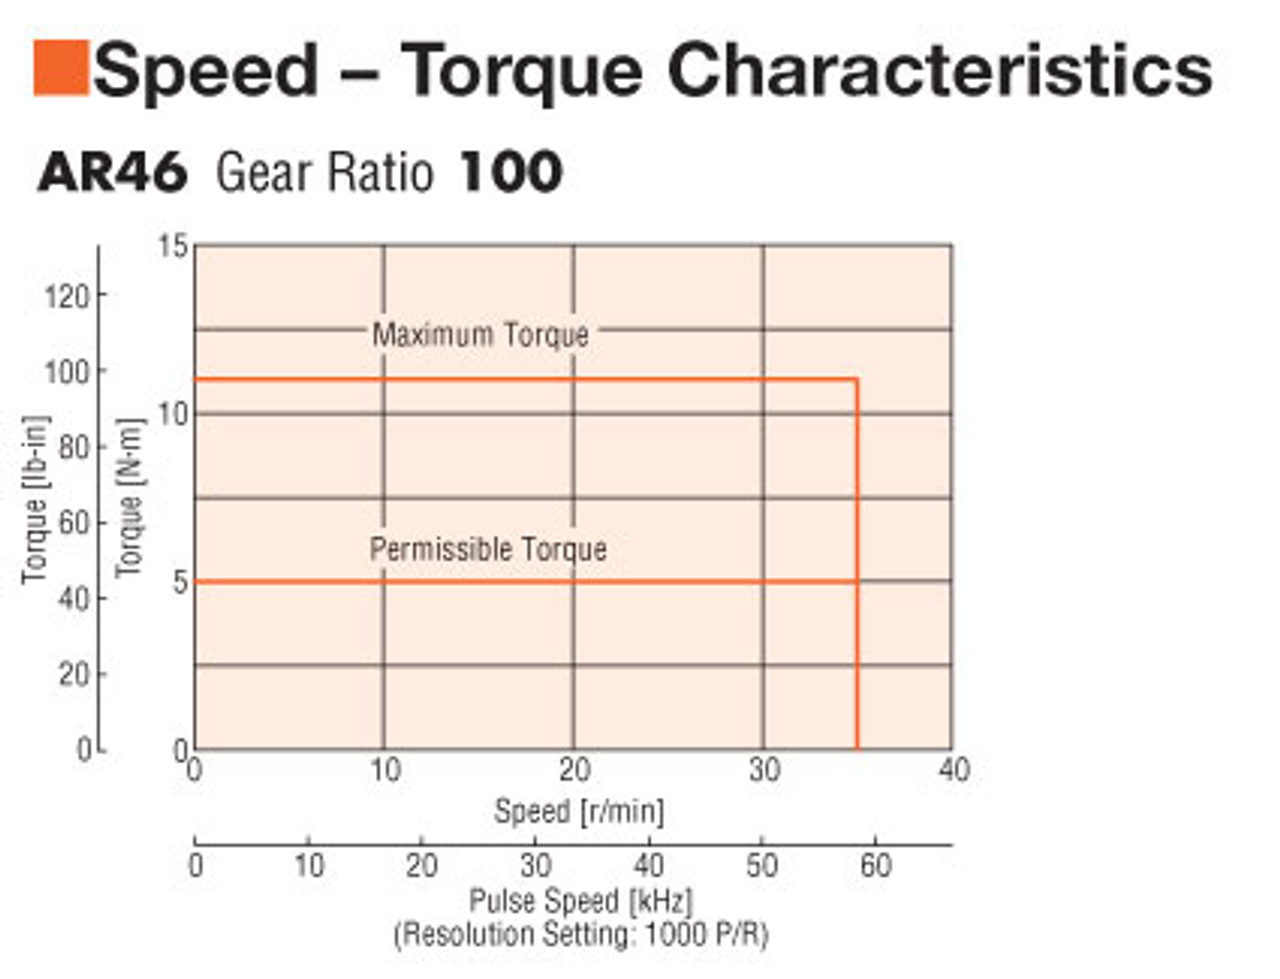 AR46MAD-H100-3 - Speed-Torque